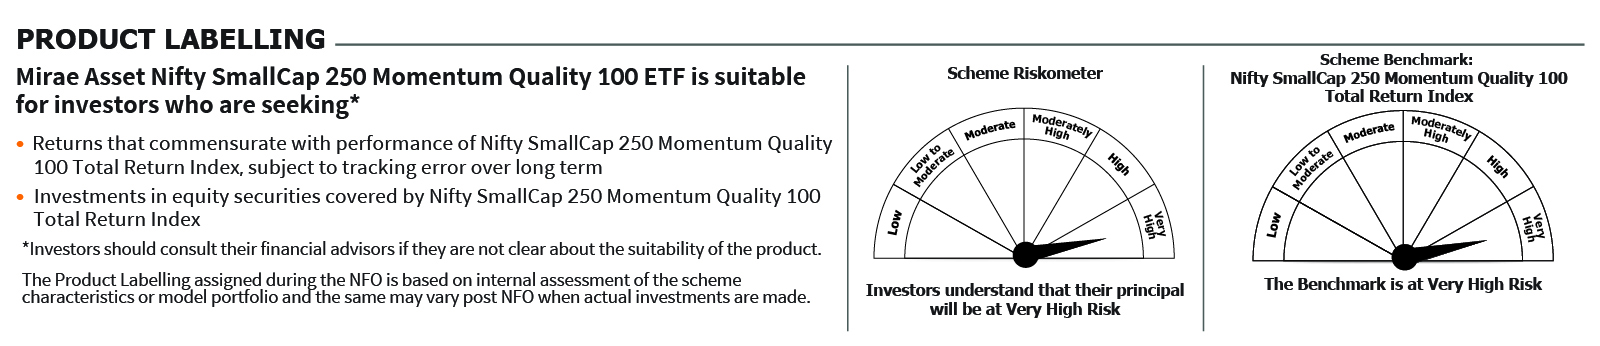 Mirae Asset Nifty Smallcap 250 Momentum Quality 100 ETF